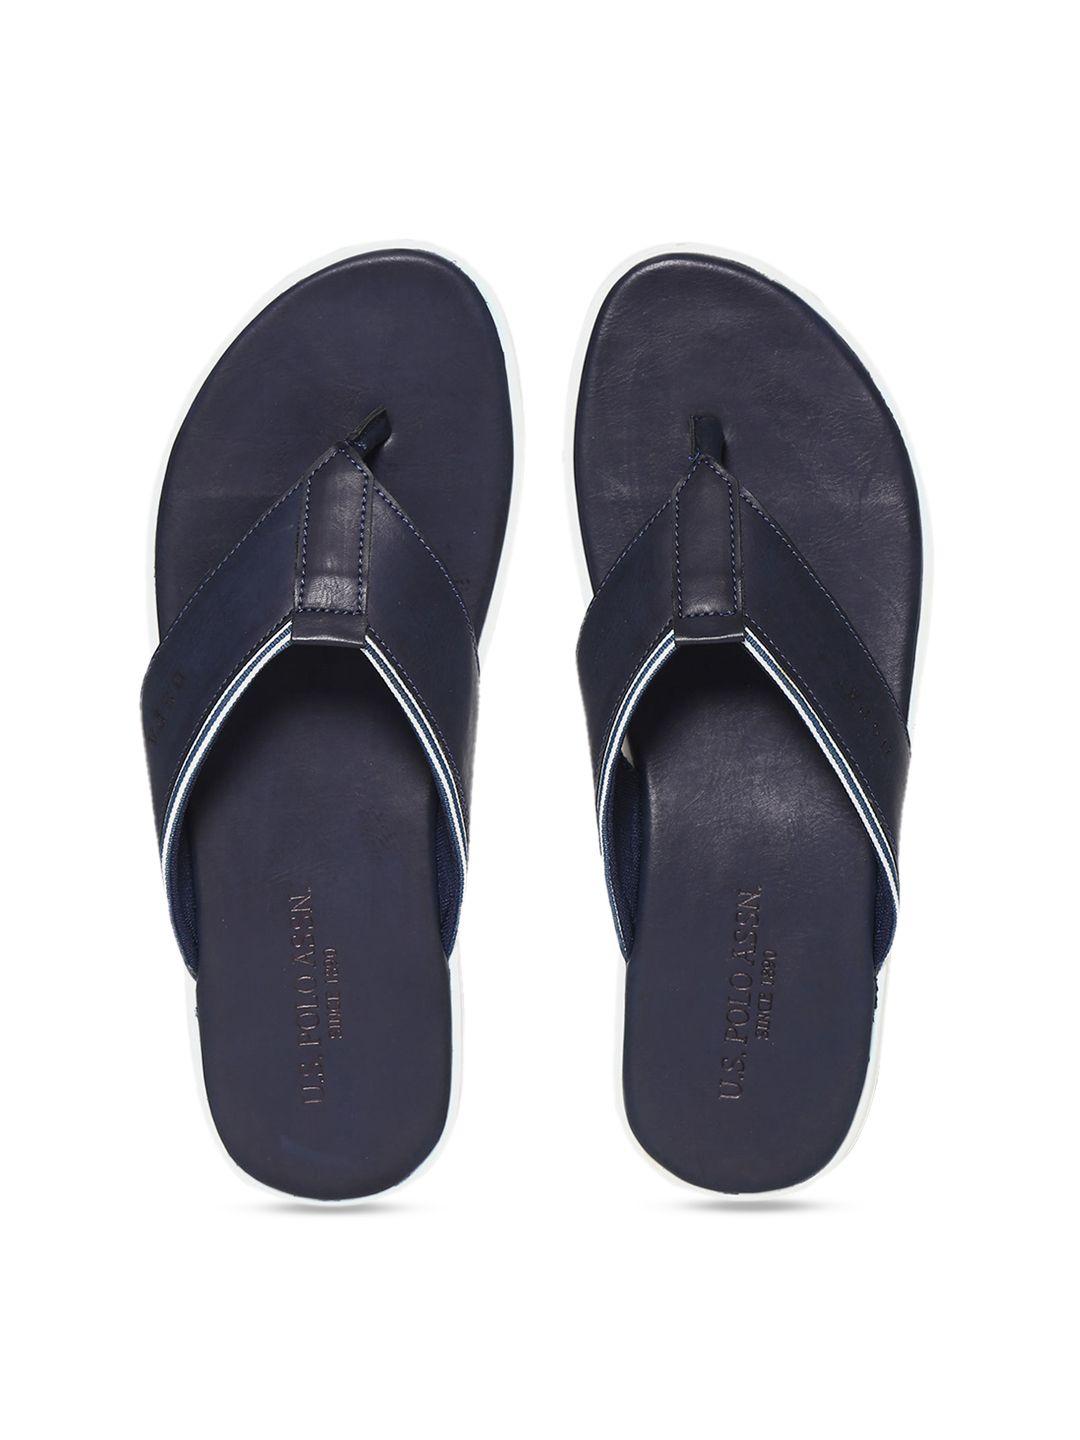 u.s. polo assn. men blue solid comfort sandals